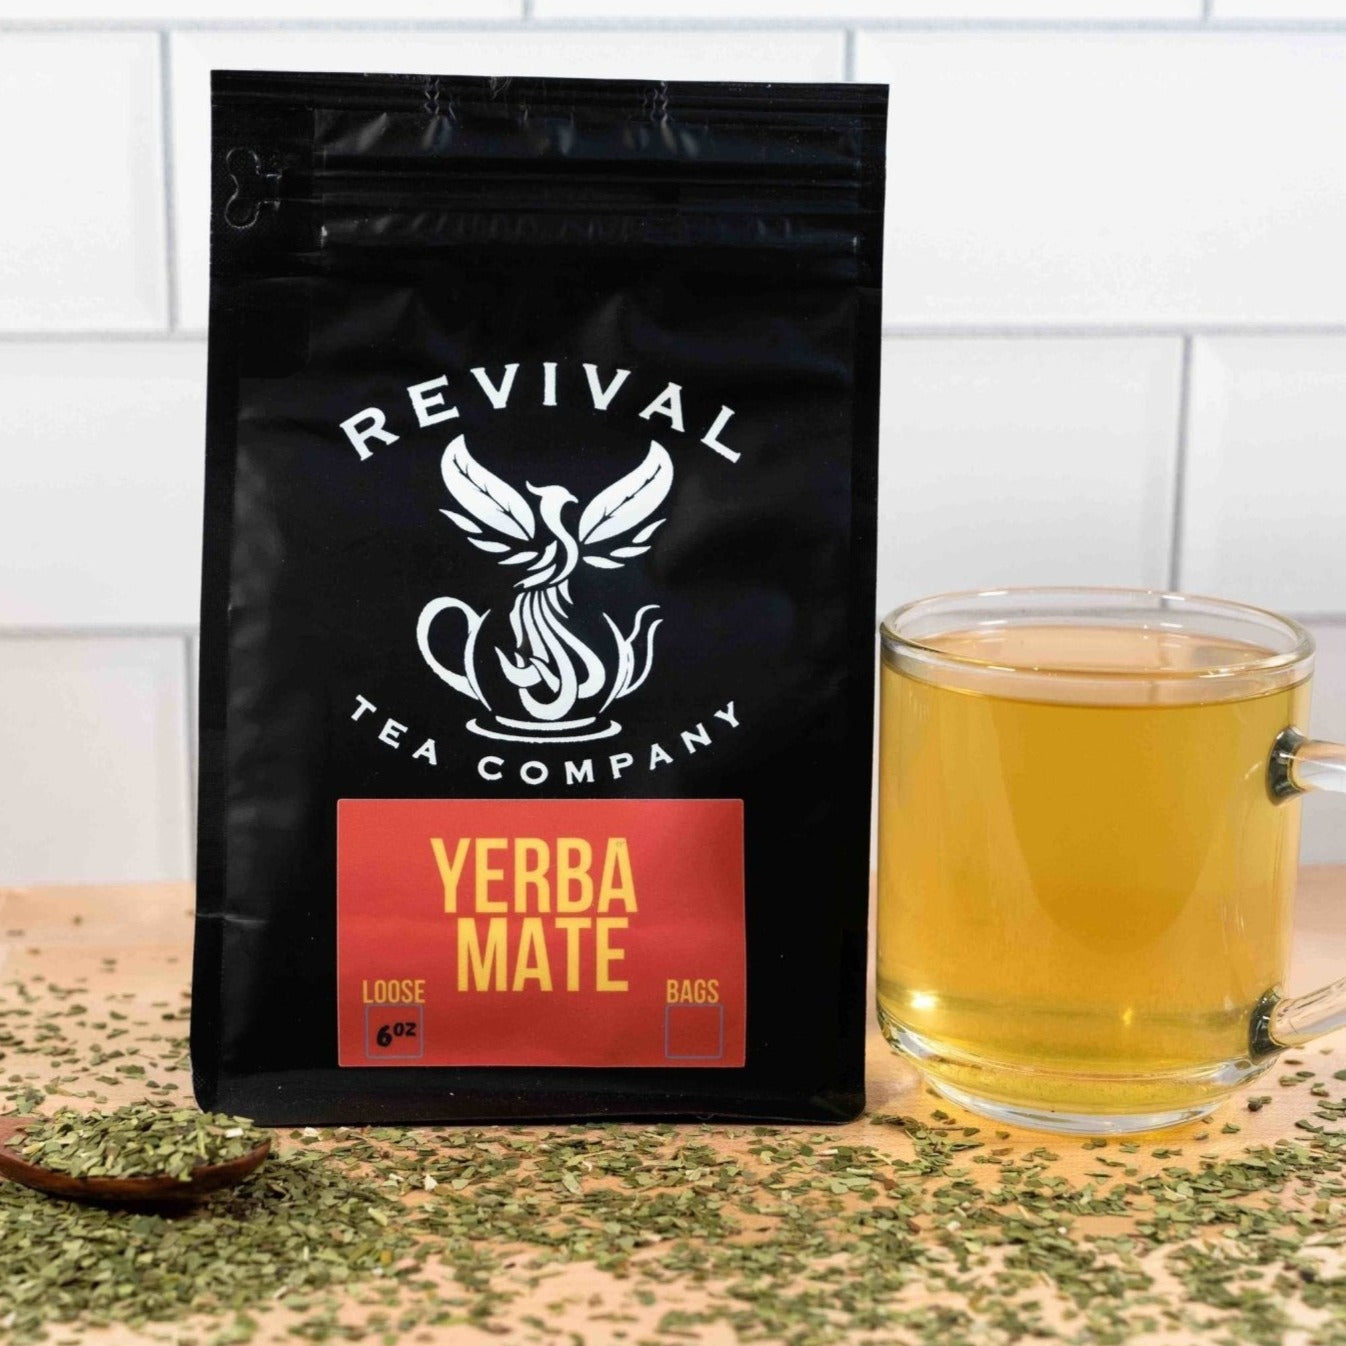 Best Yerba Mate: The Best Yerba Mate We Tasted